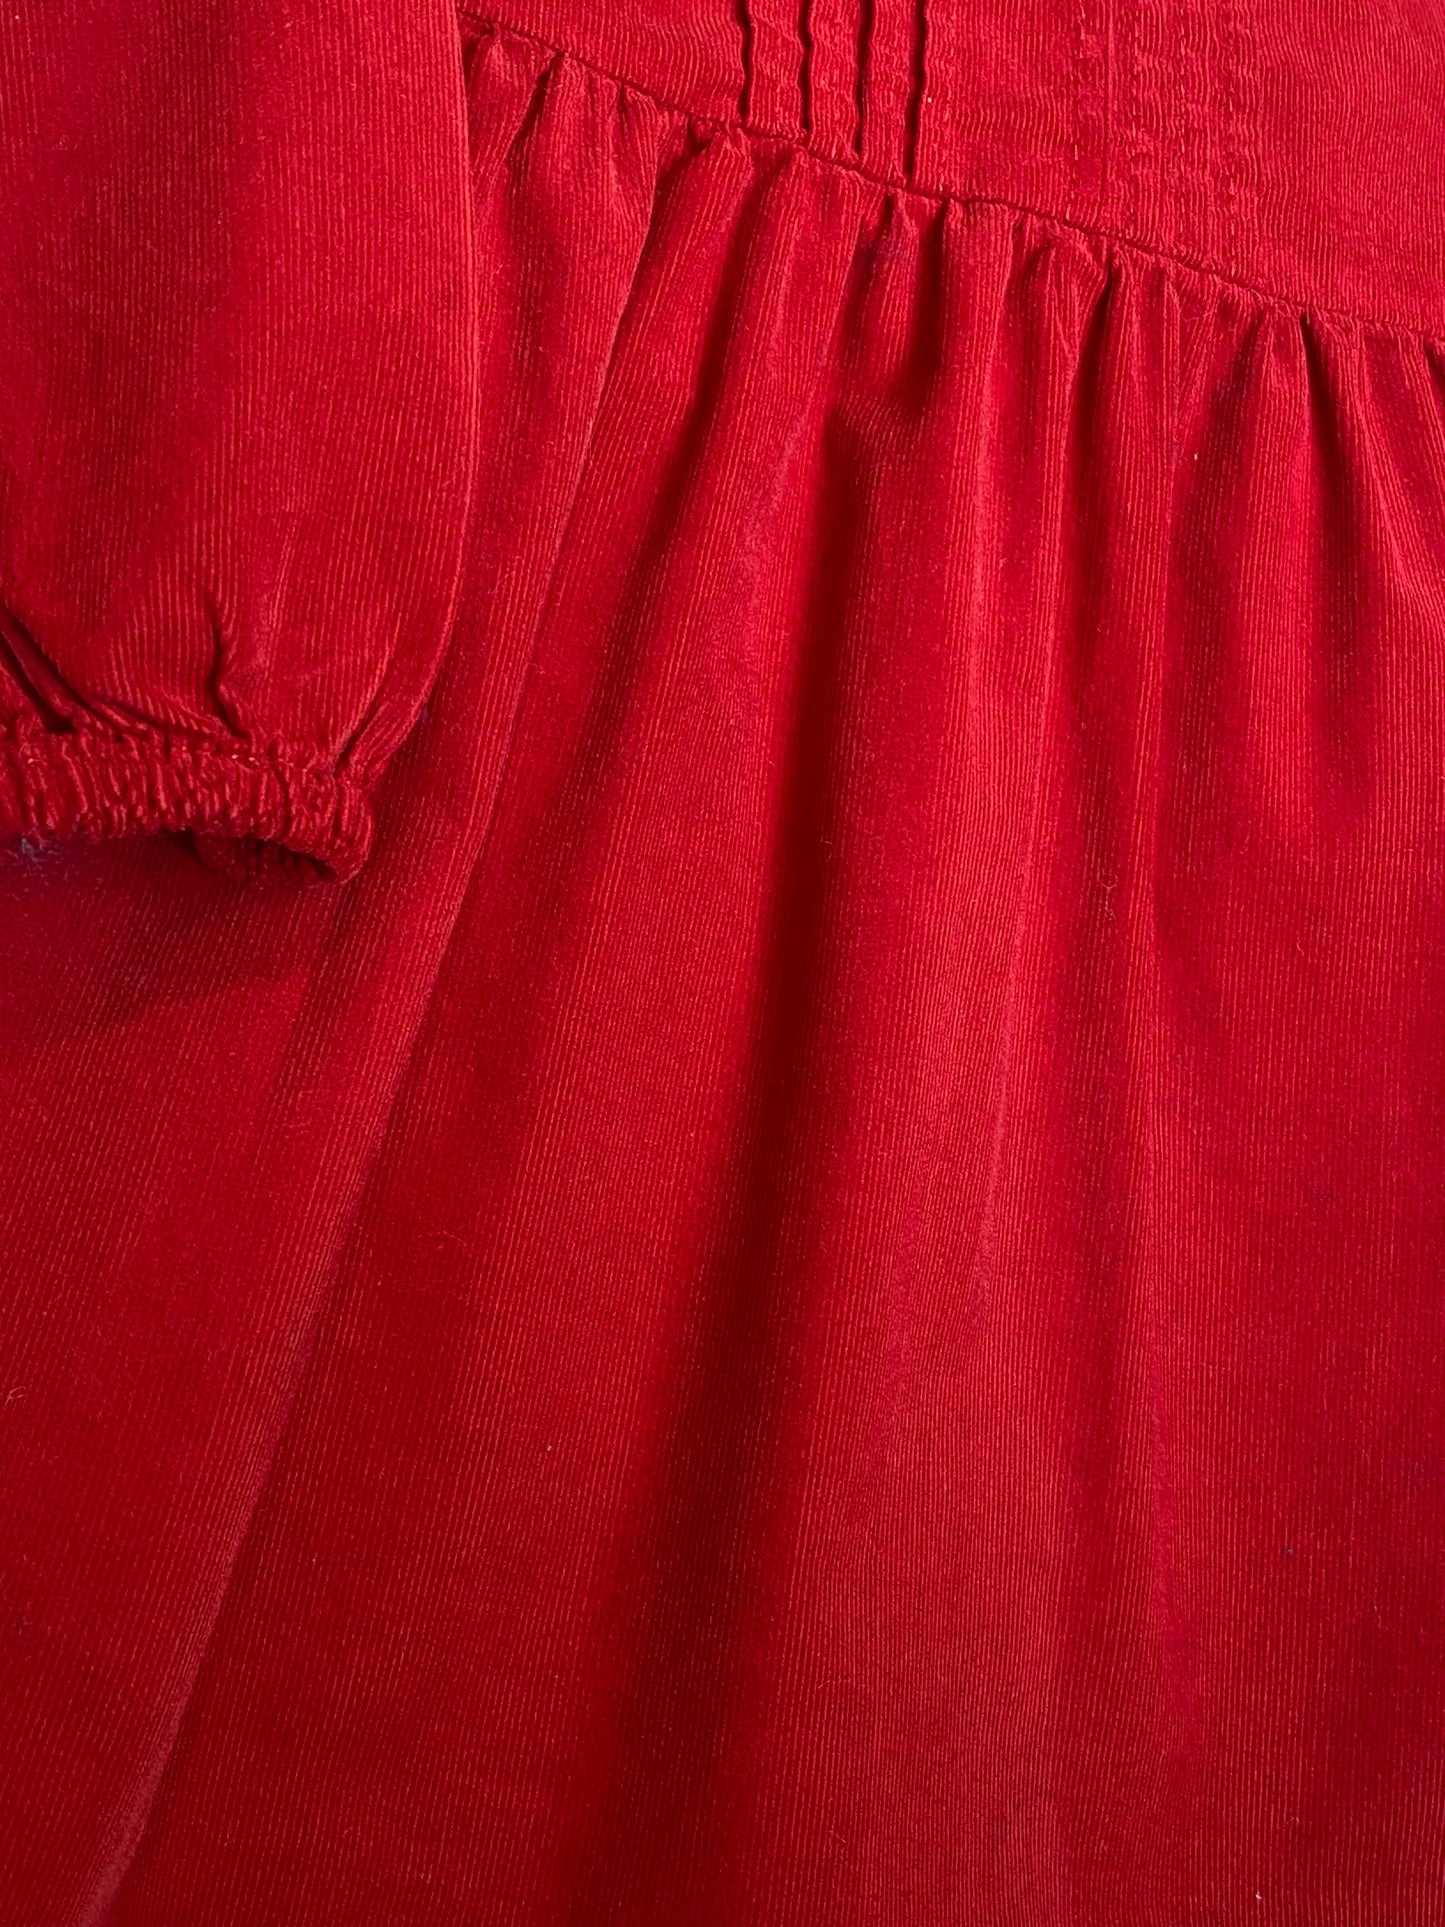 Robe velours côtelé, rouge, Vertbaudet